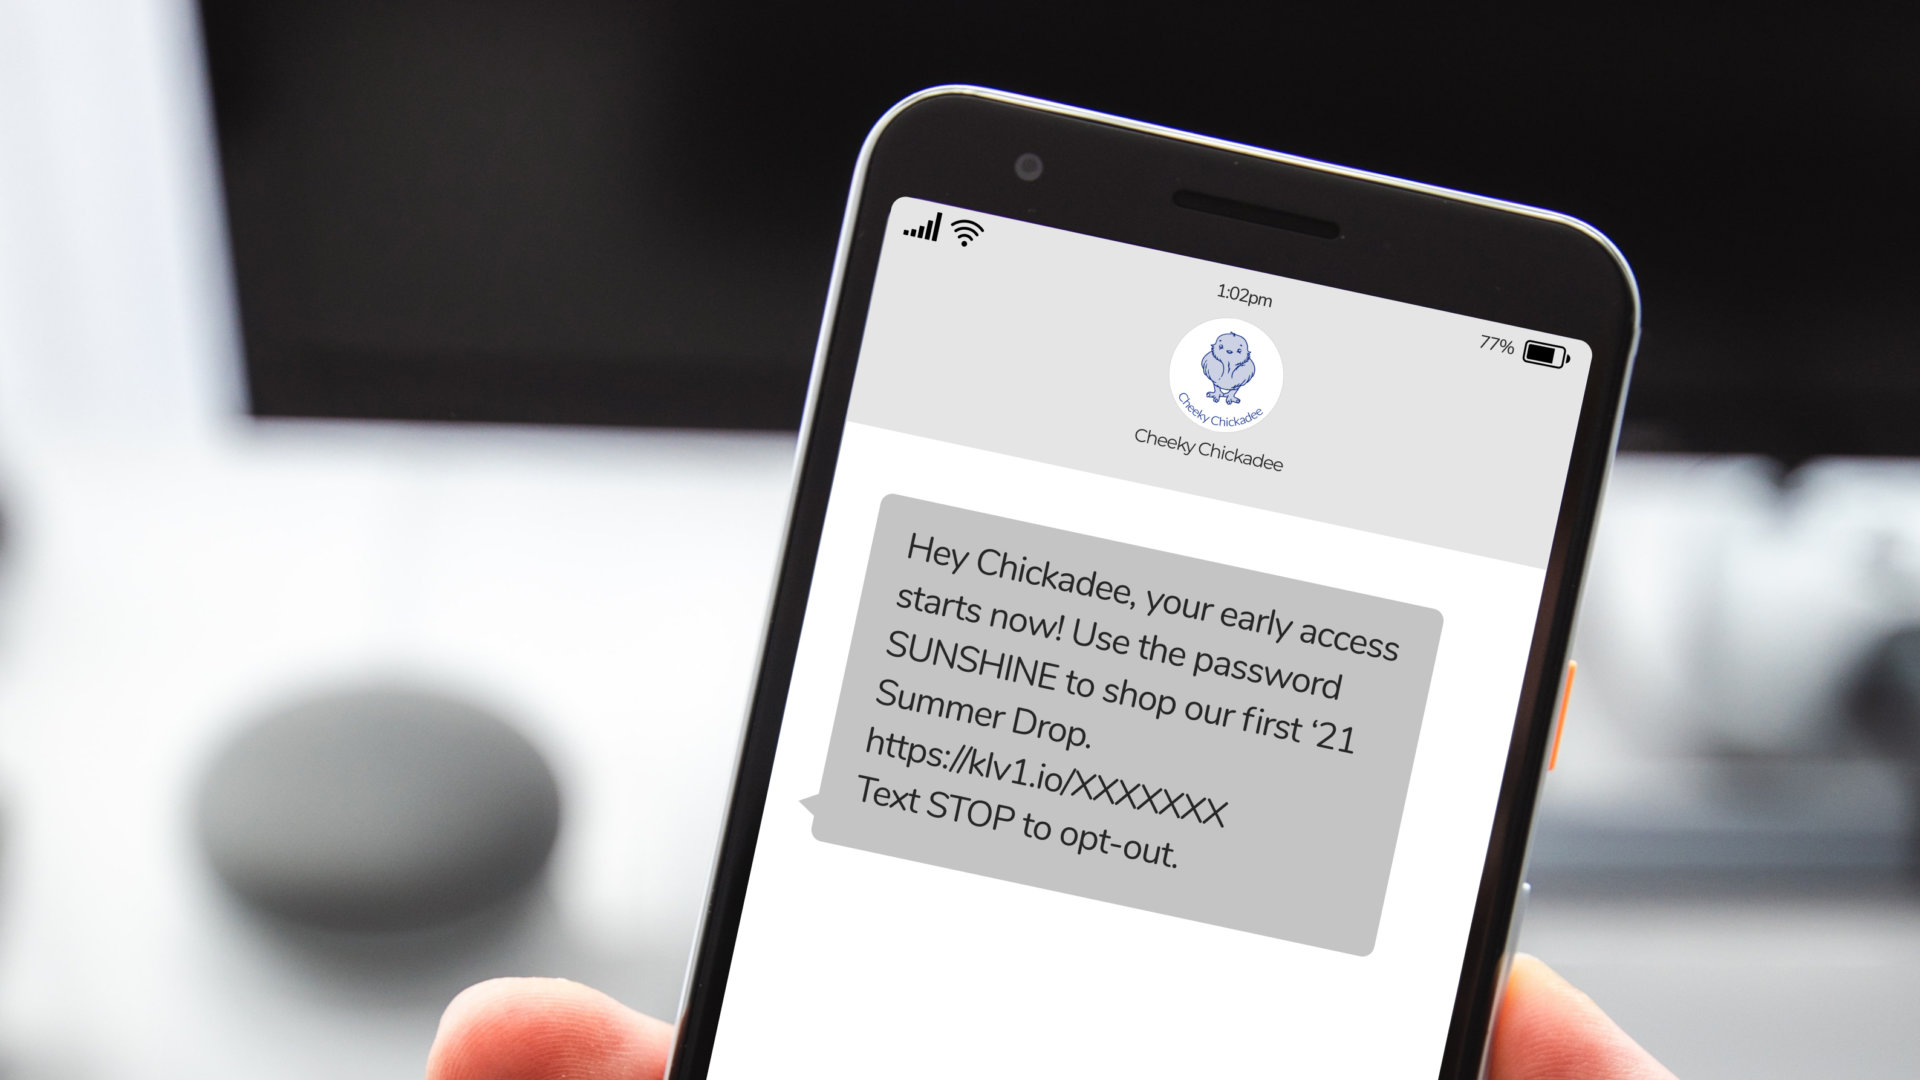 Cheeky Chickadee x Klaviyo SMS